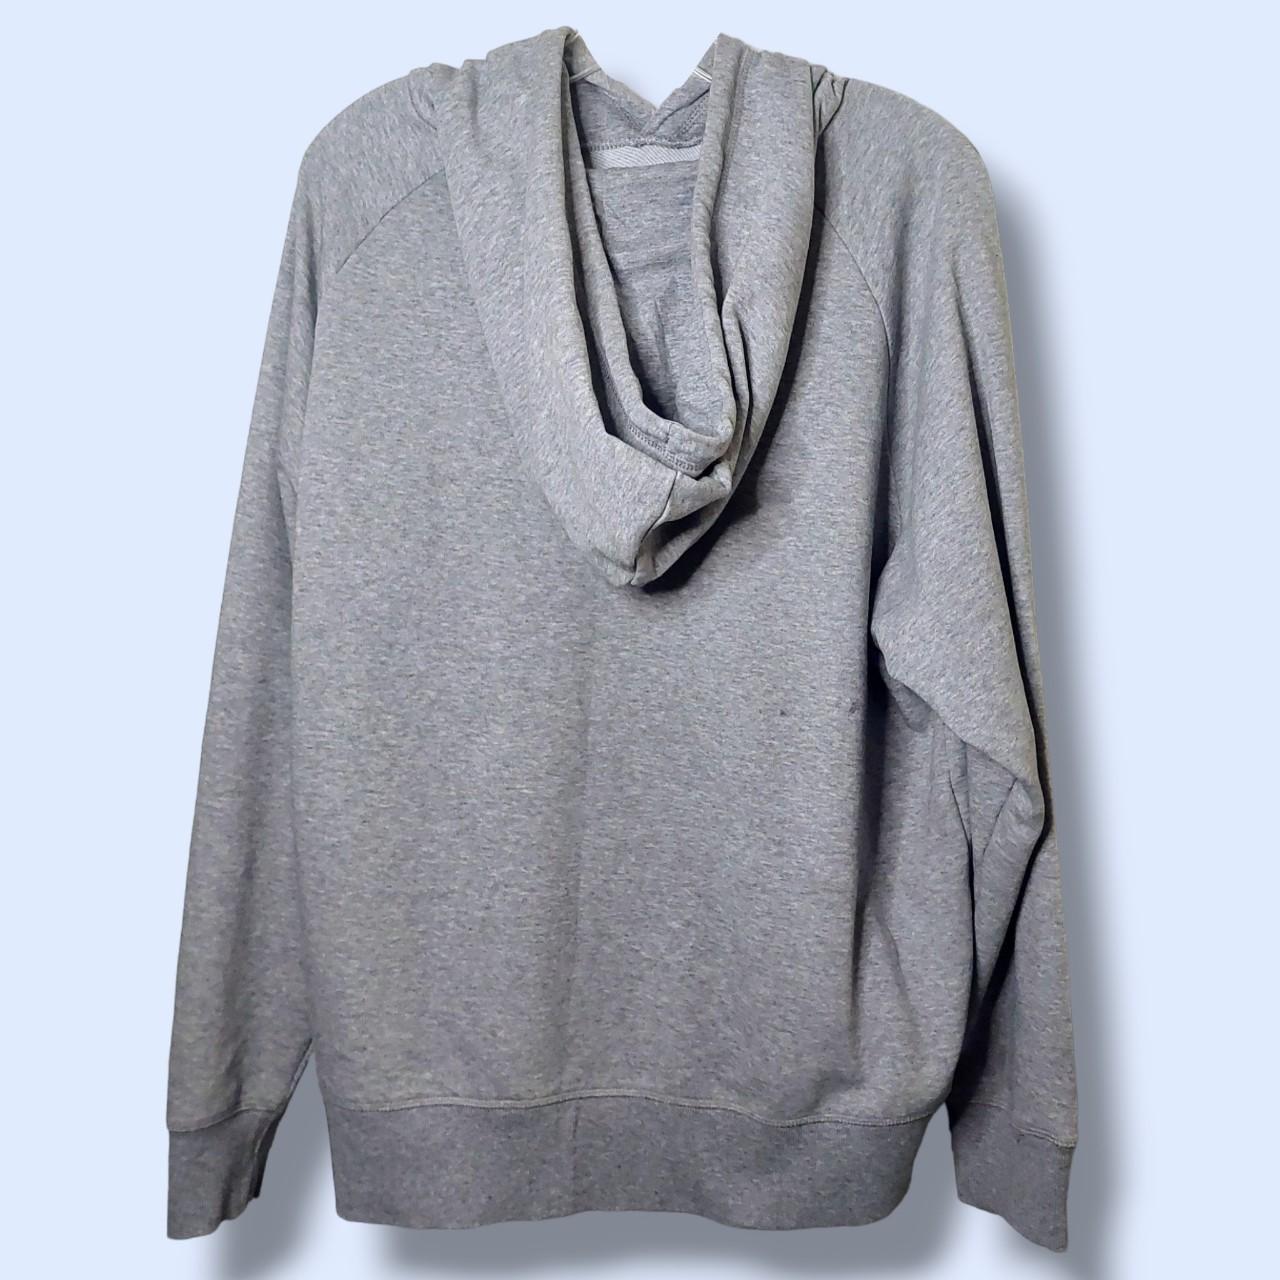 New Balance Women's Grey Sweatshirt (4)